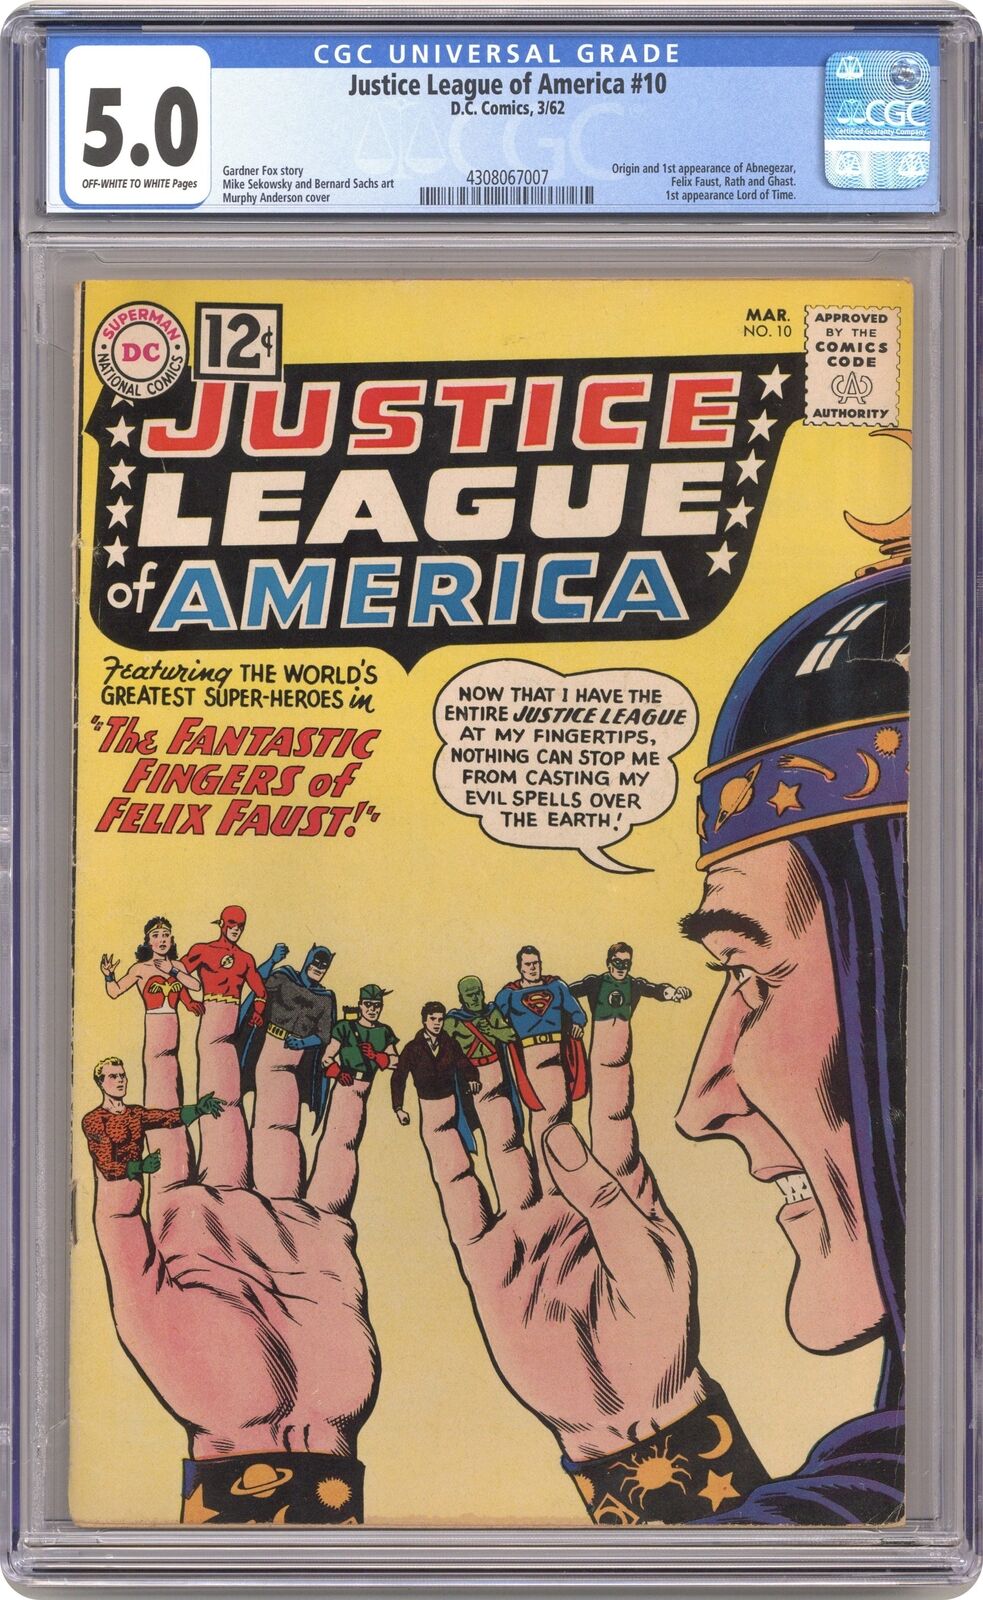 Justice League of America #10 CGC 5.0 1962 4308067007